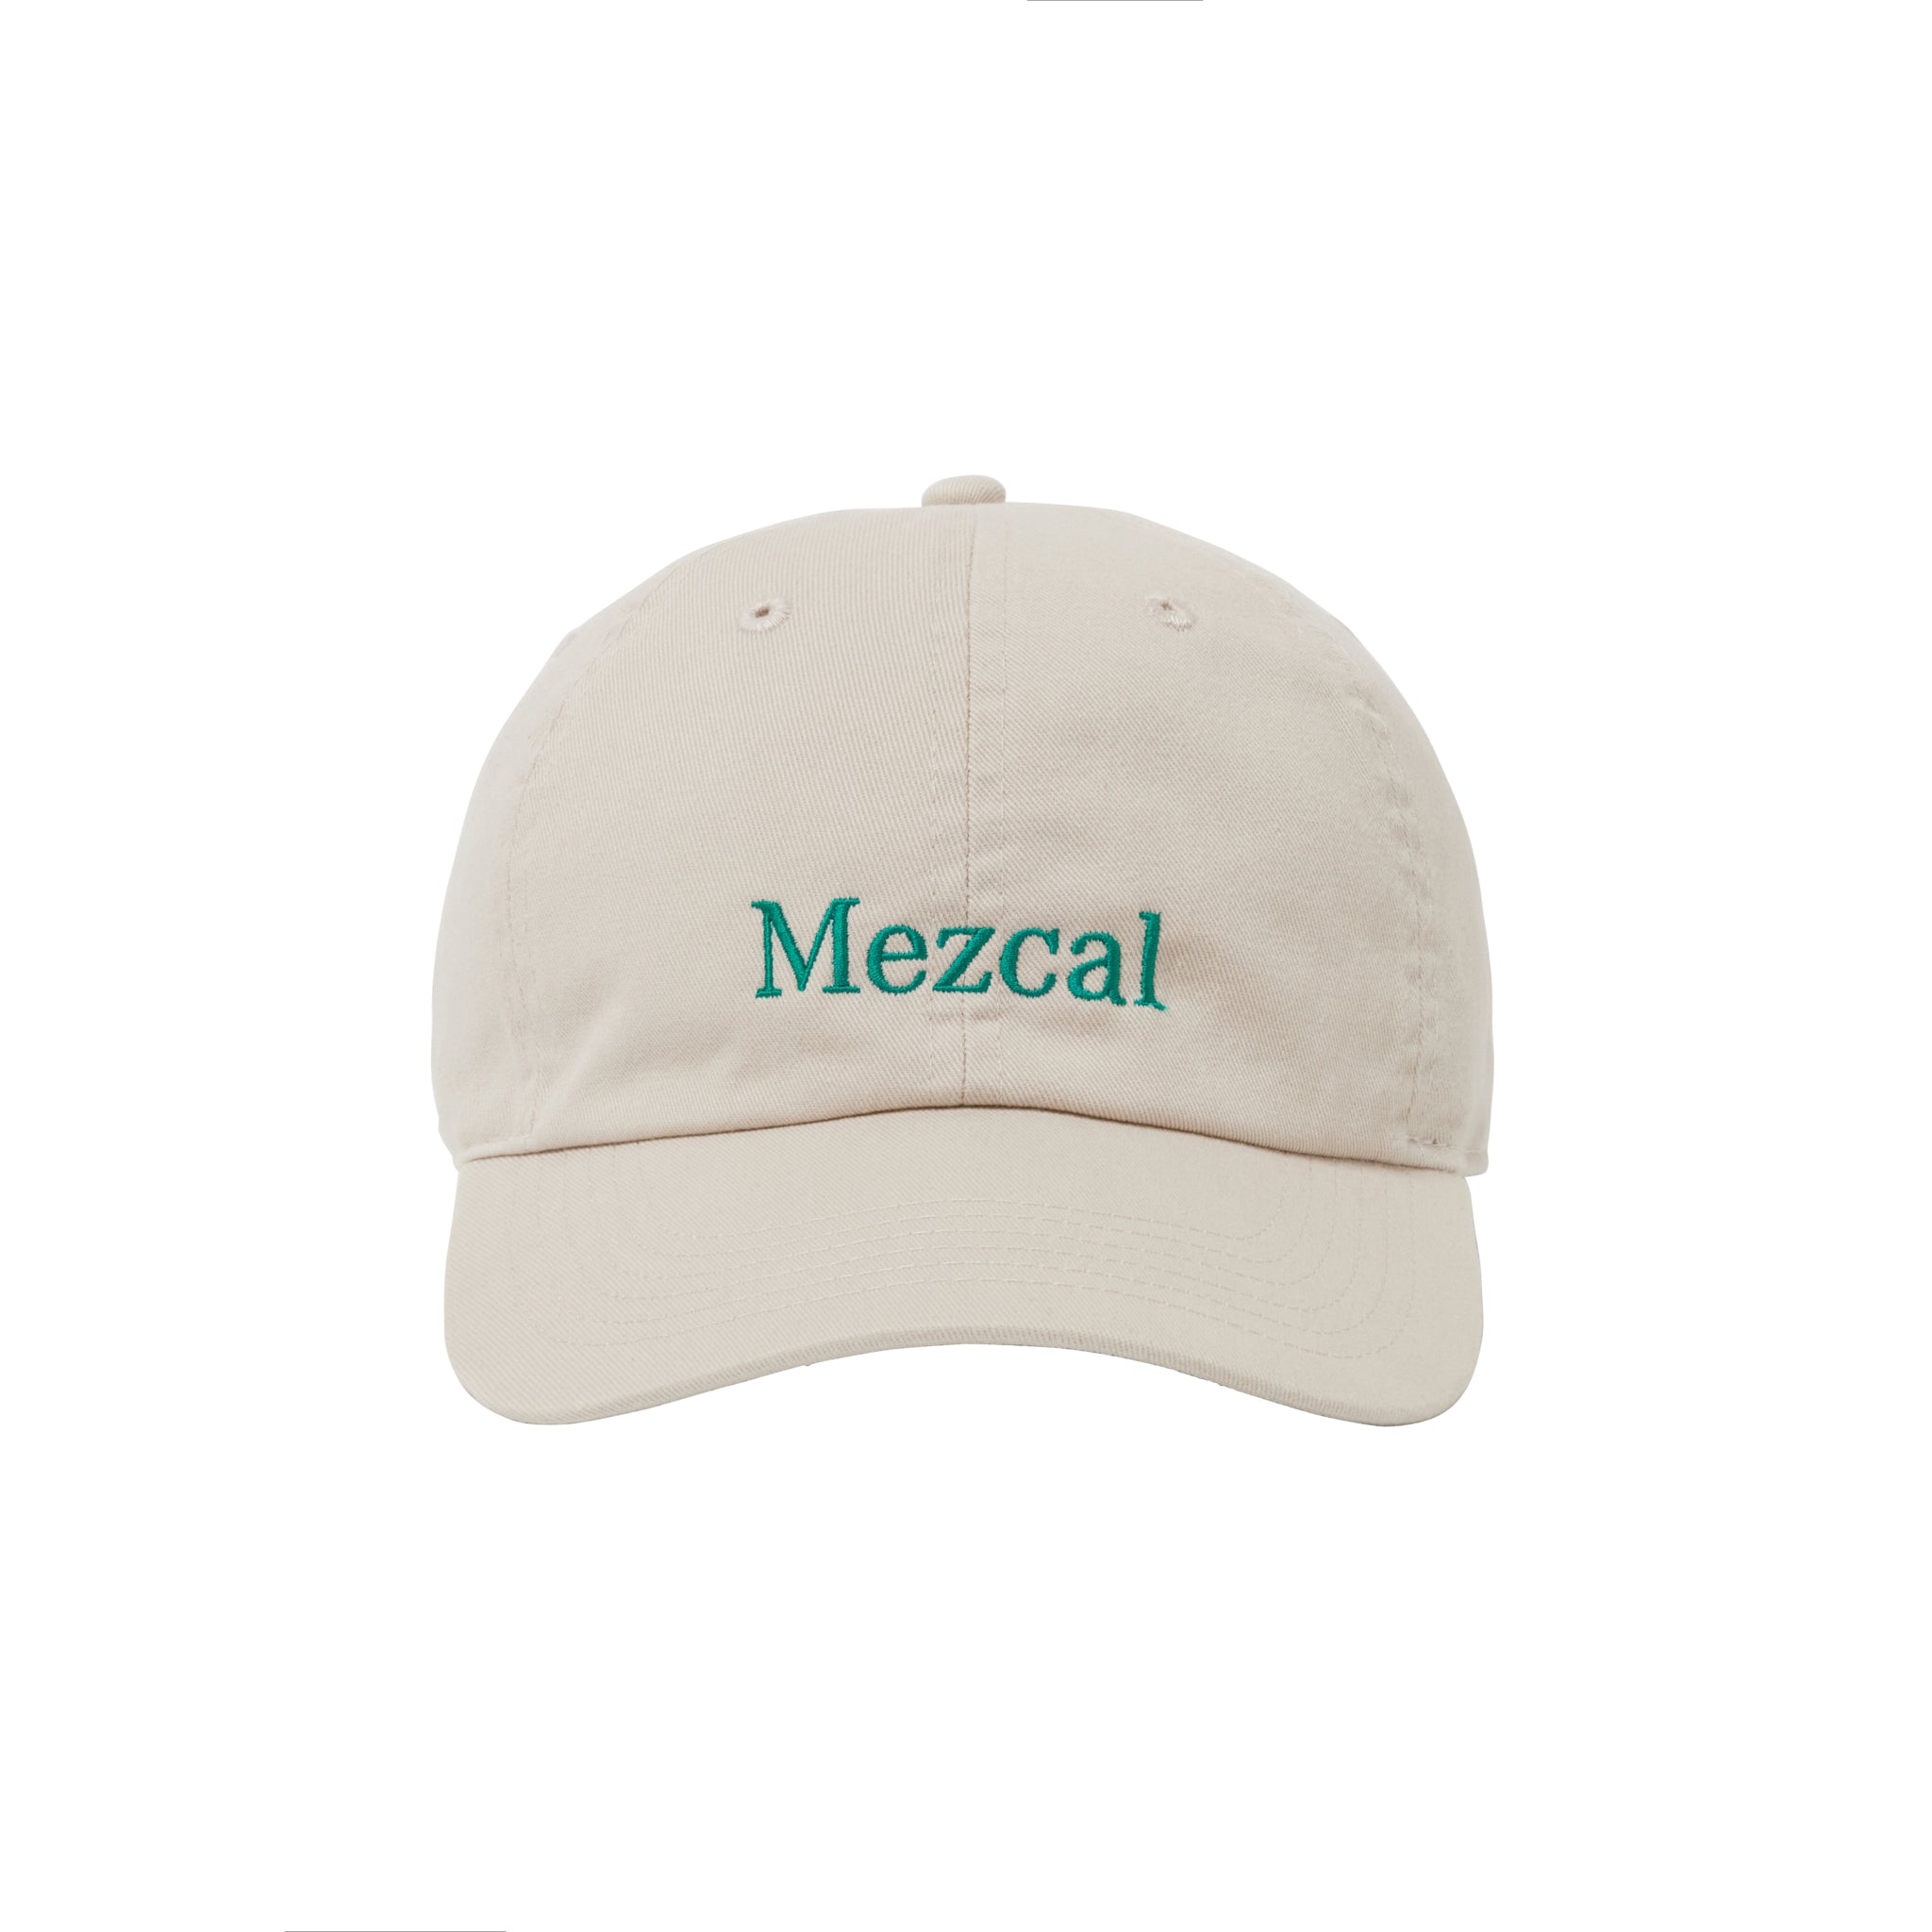 MASATO MAEKAWA - 'Mezcal' BASEBALL CAP